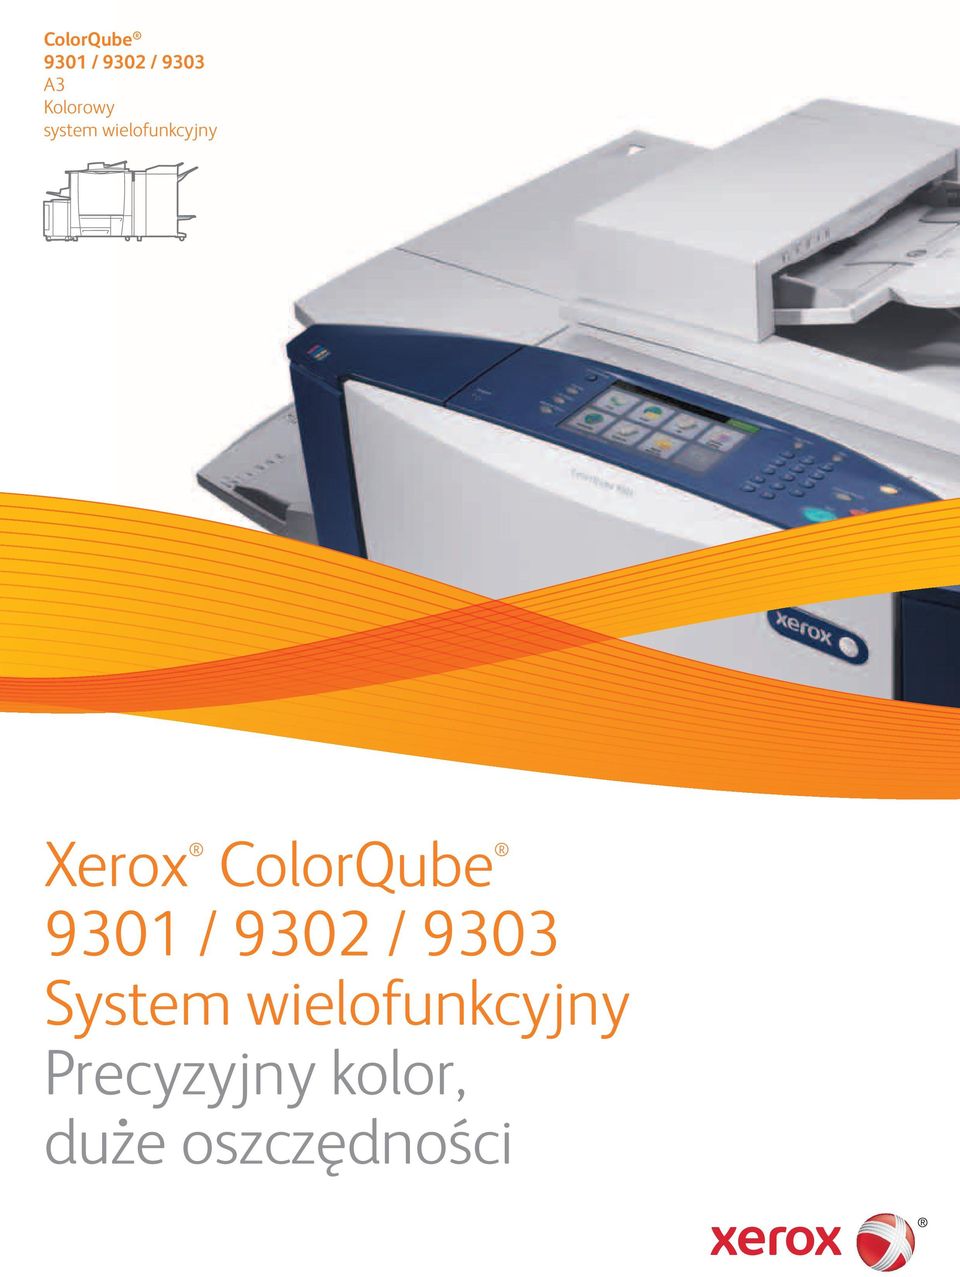 ColorQube 9301 / 9302 / 9303 System